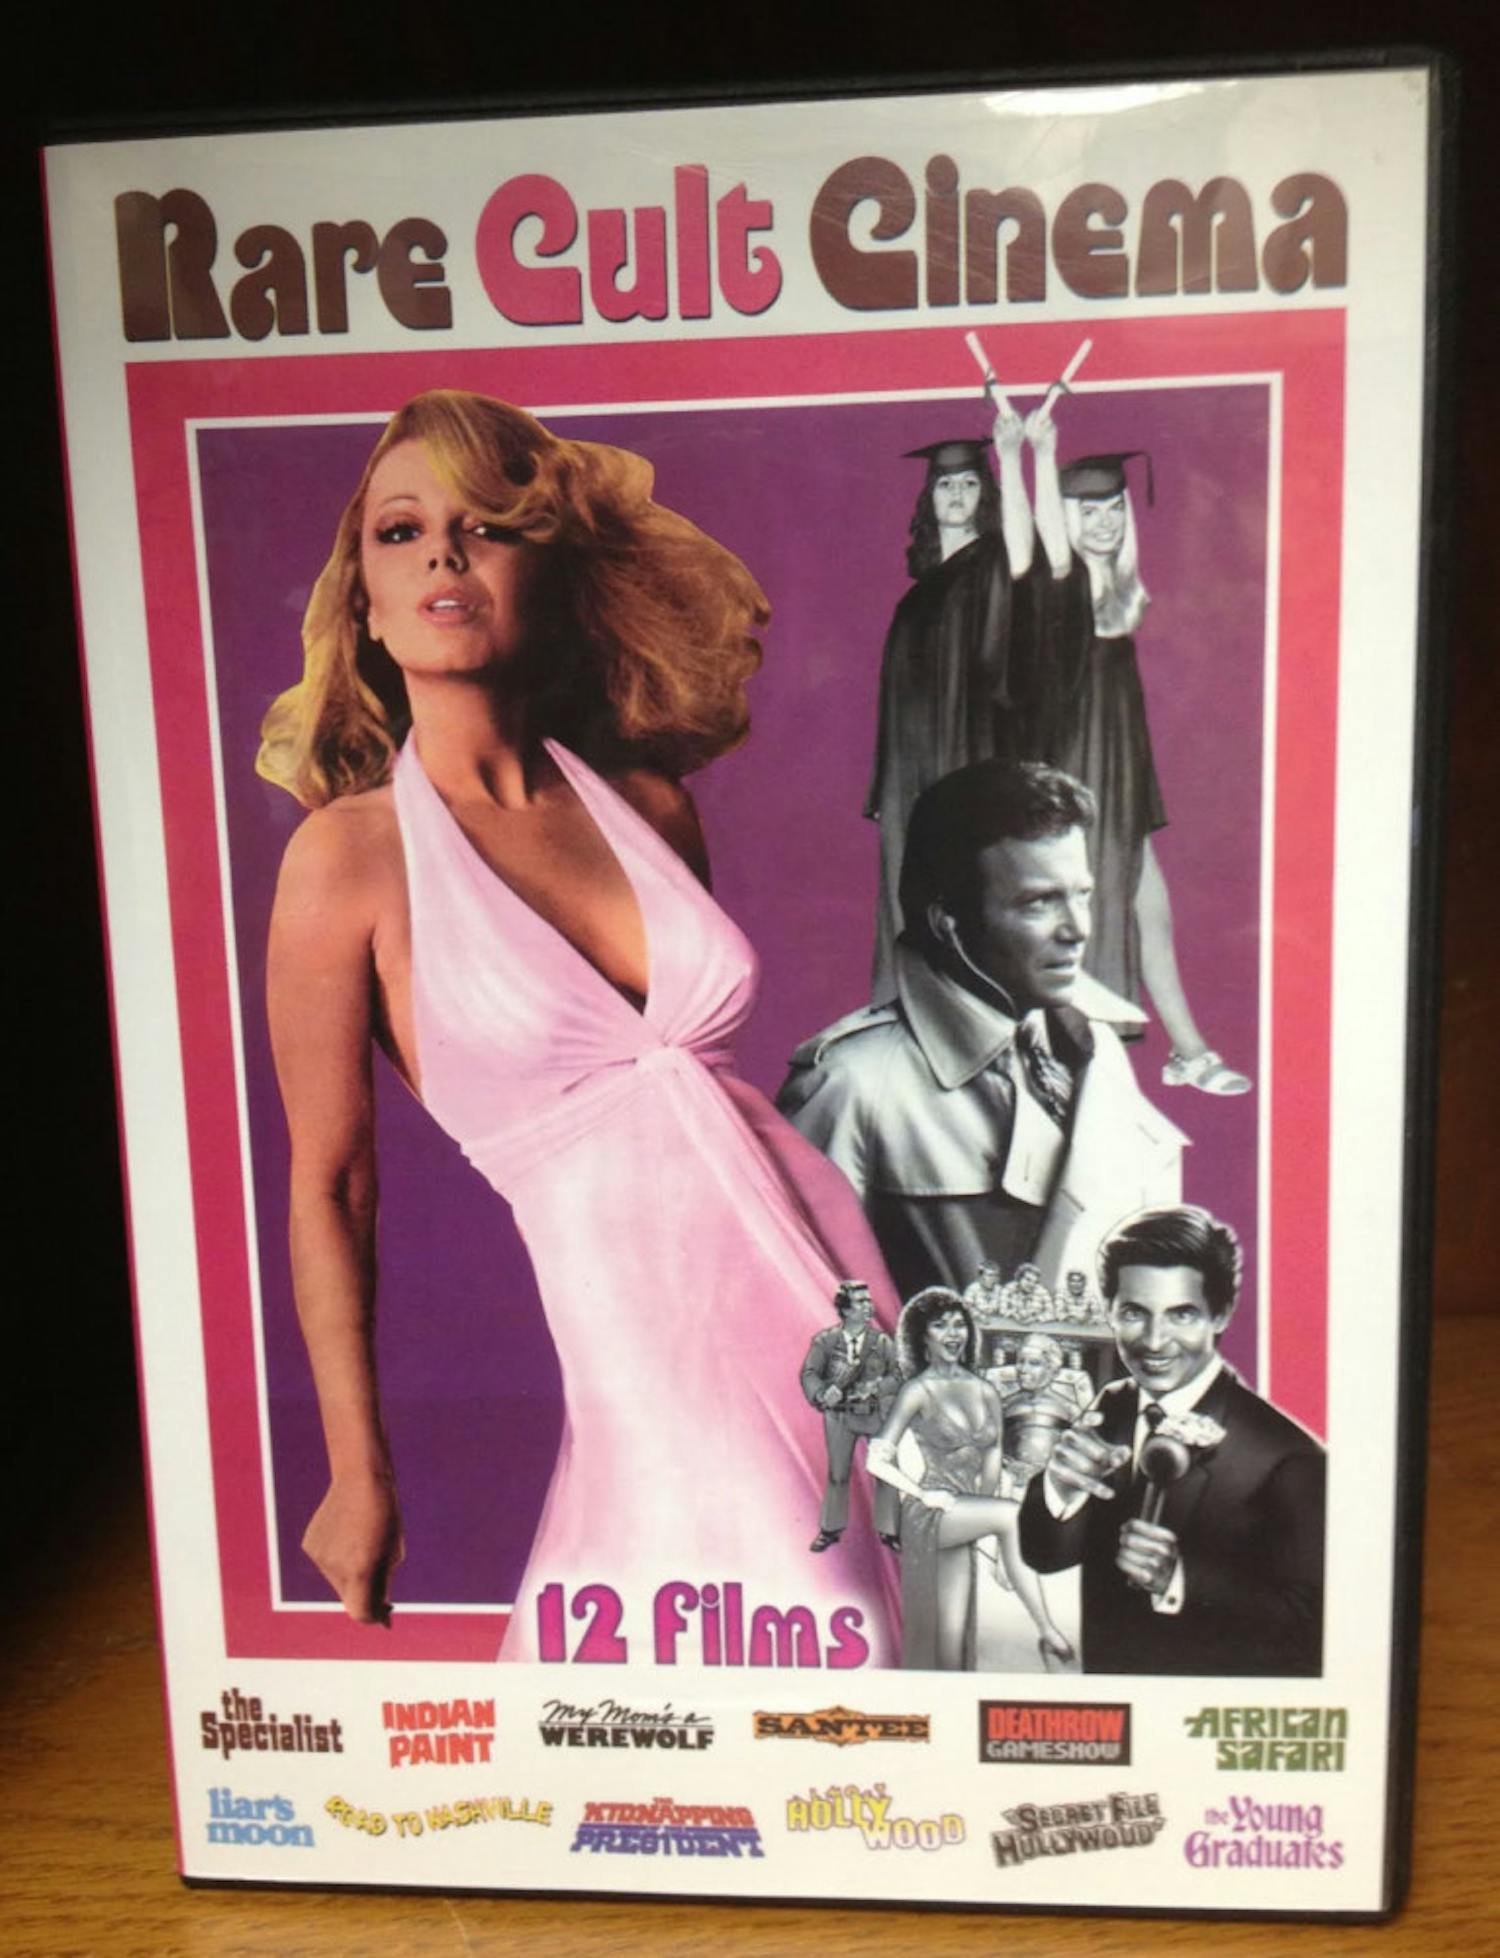 12 Films of Rare Cult Cinema
$3